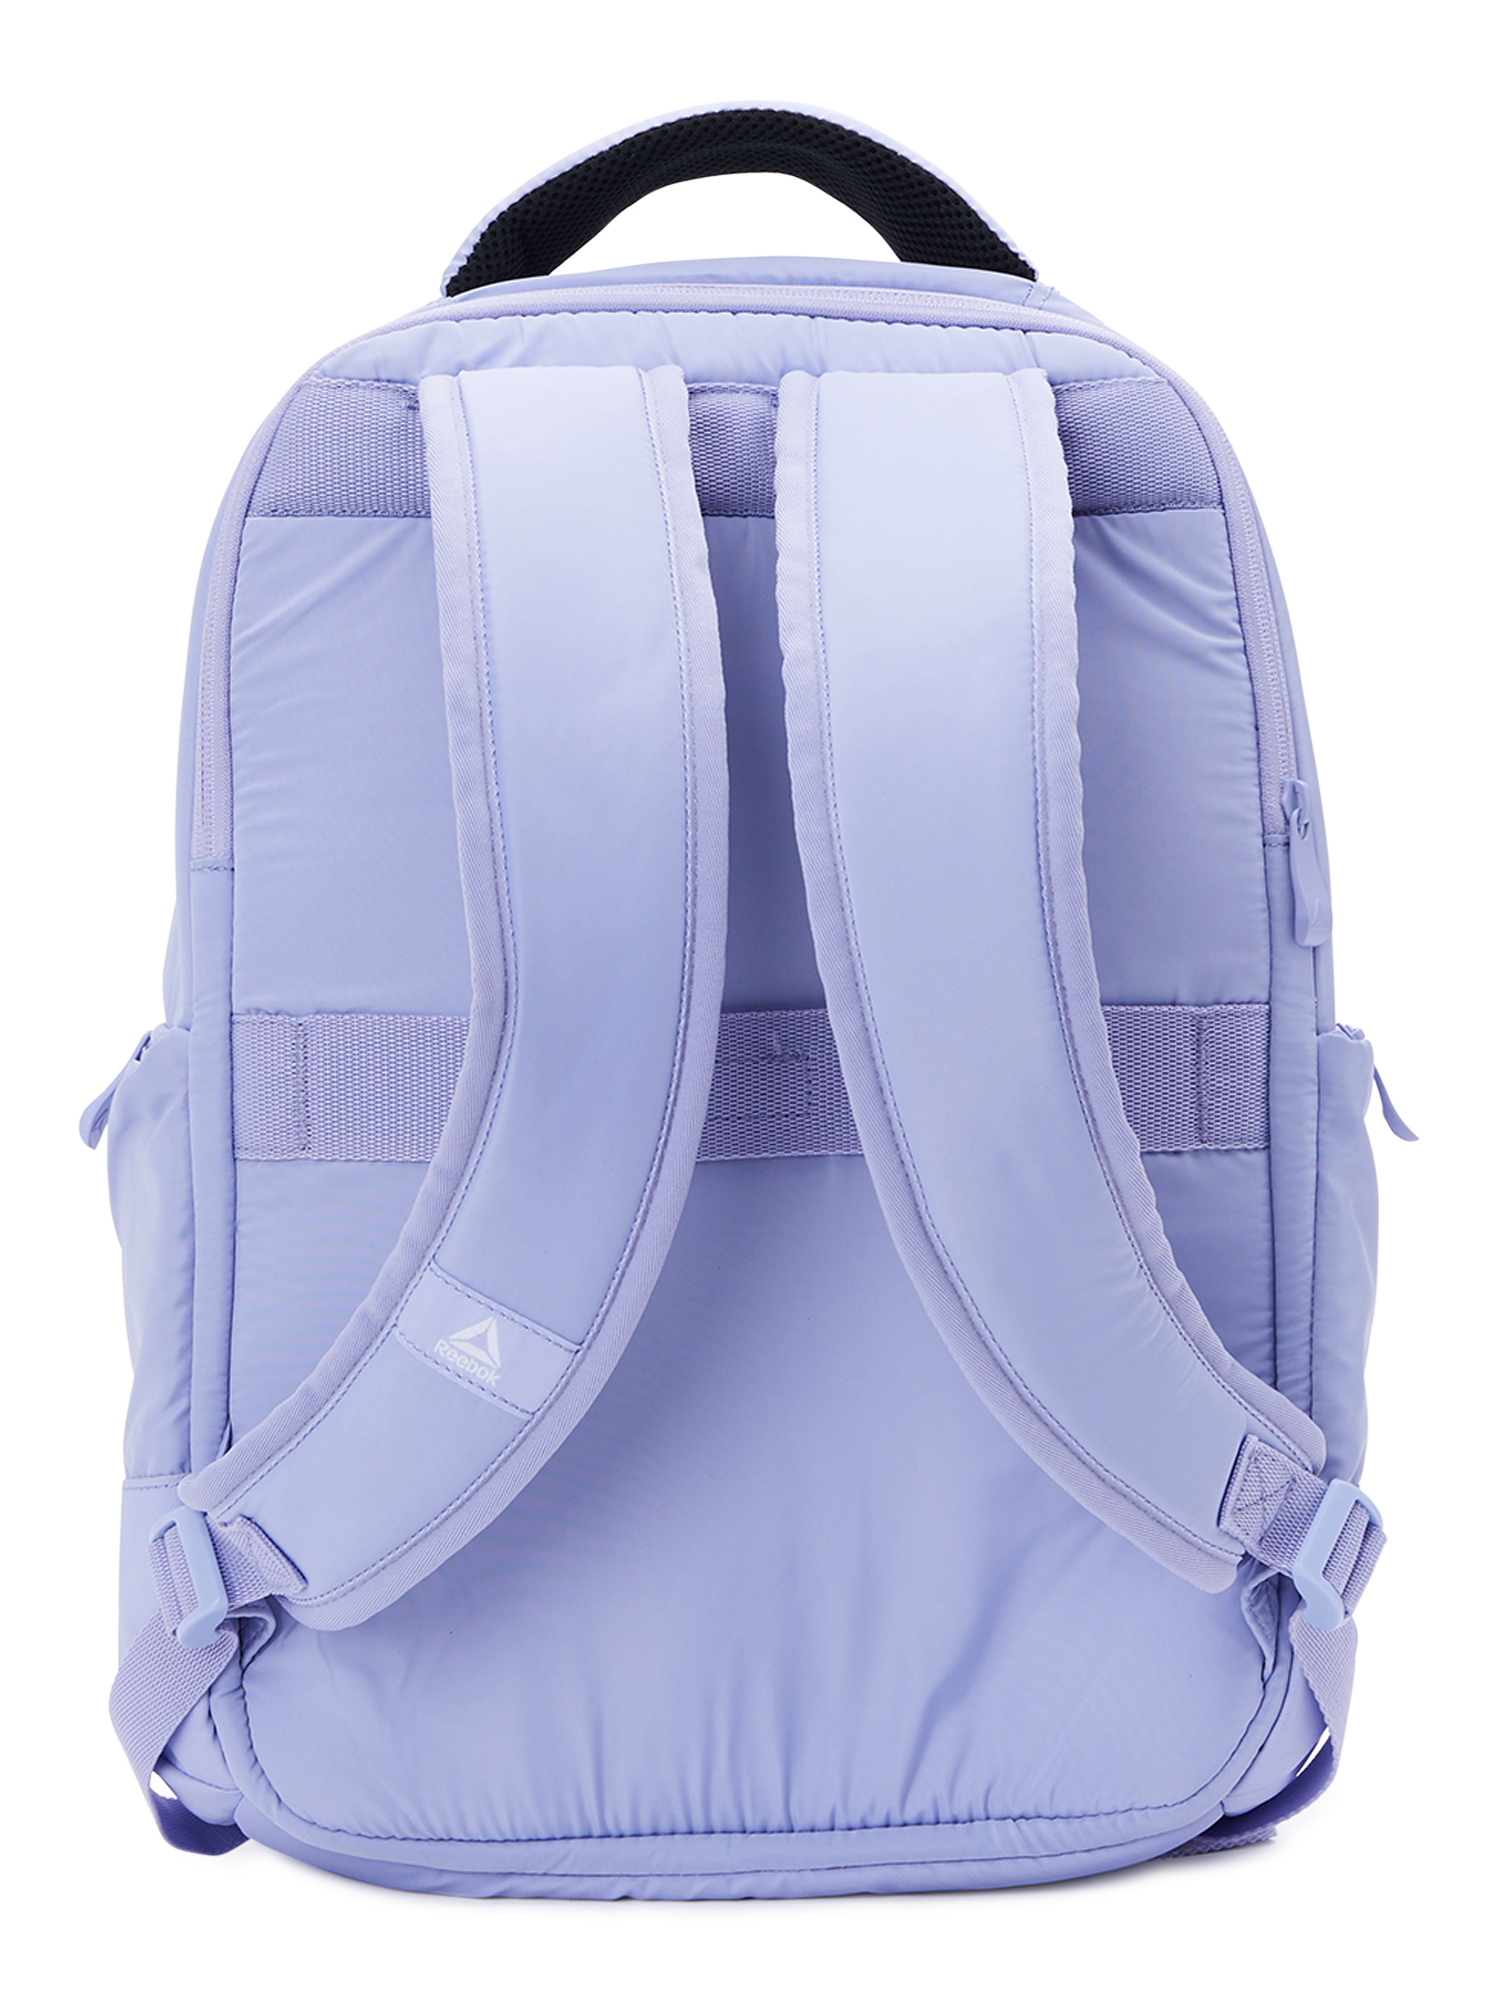 Reebok Unisex Adult Winter 16" Laptop Backpack, Sweet Lavender - image 3 of 5